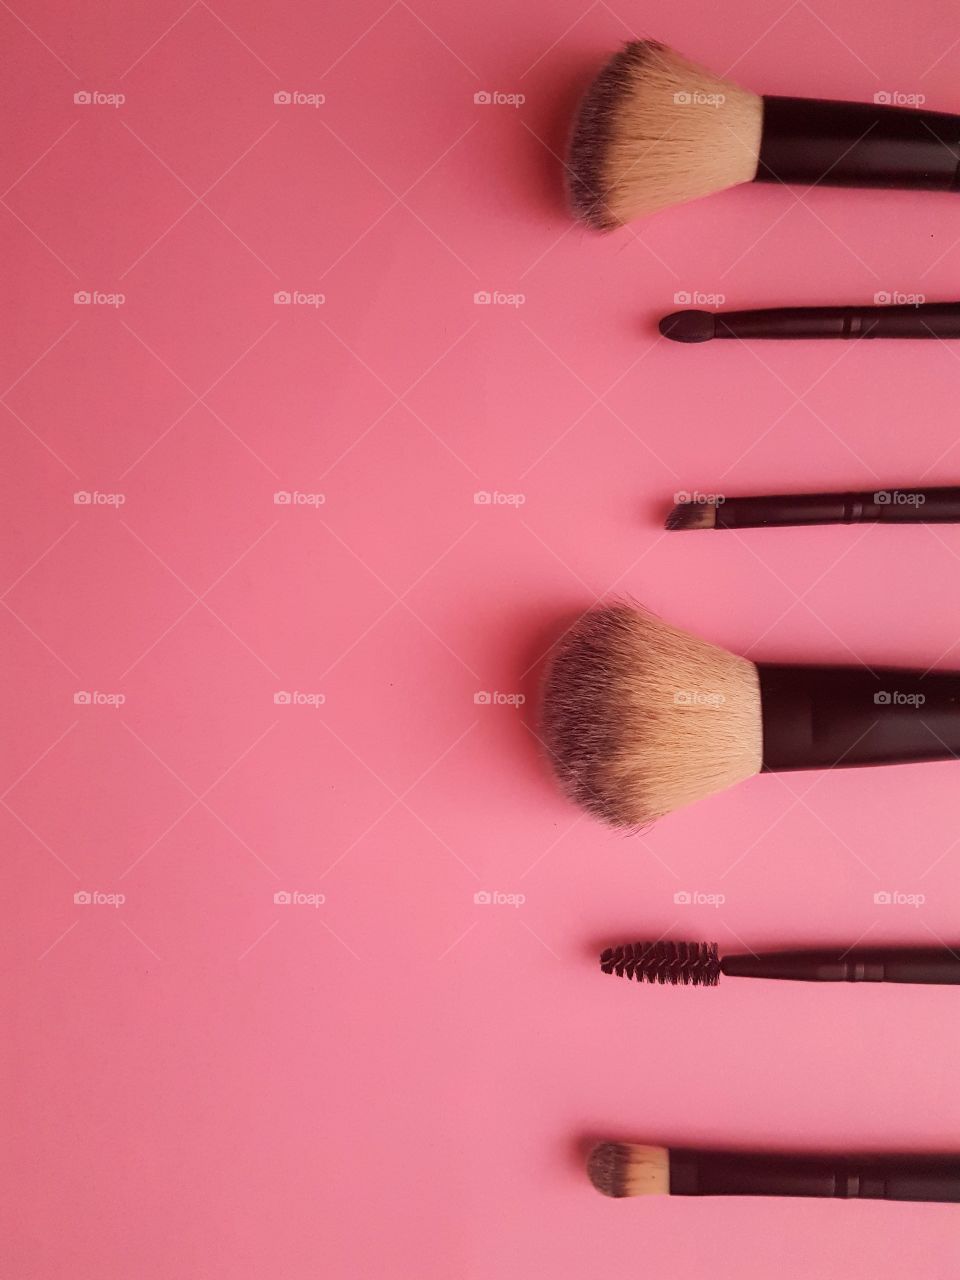 Make up brush on pink background